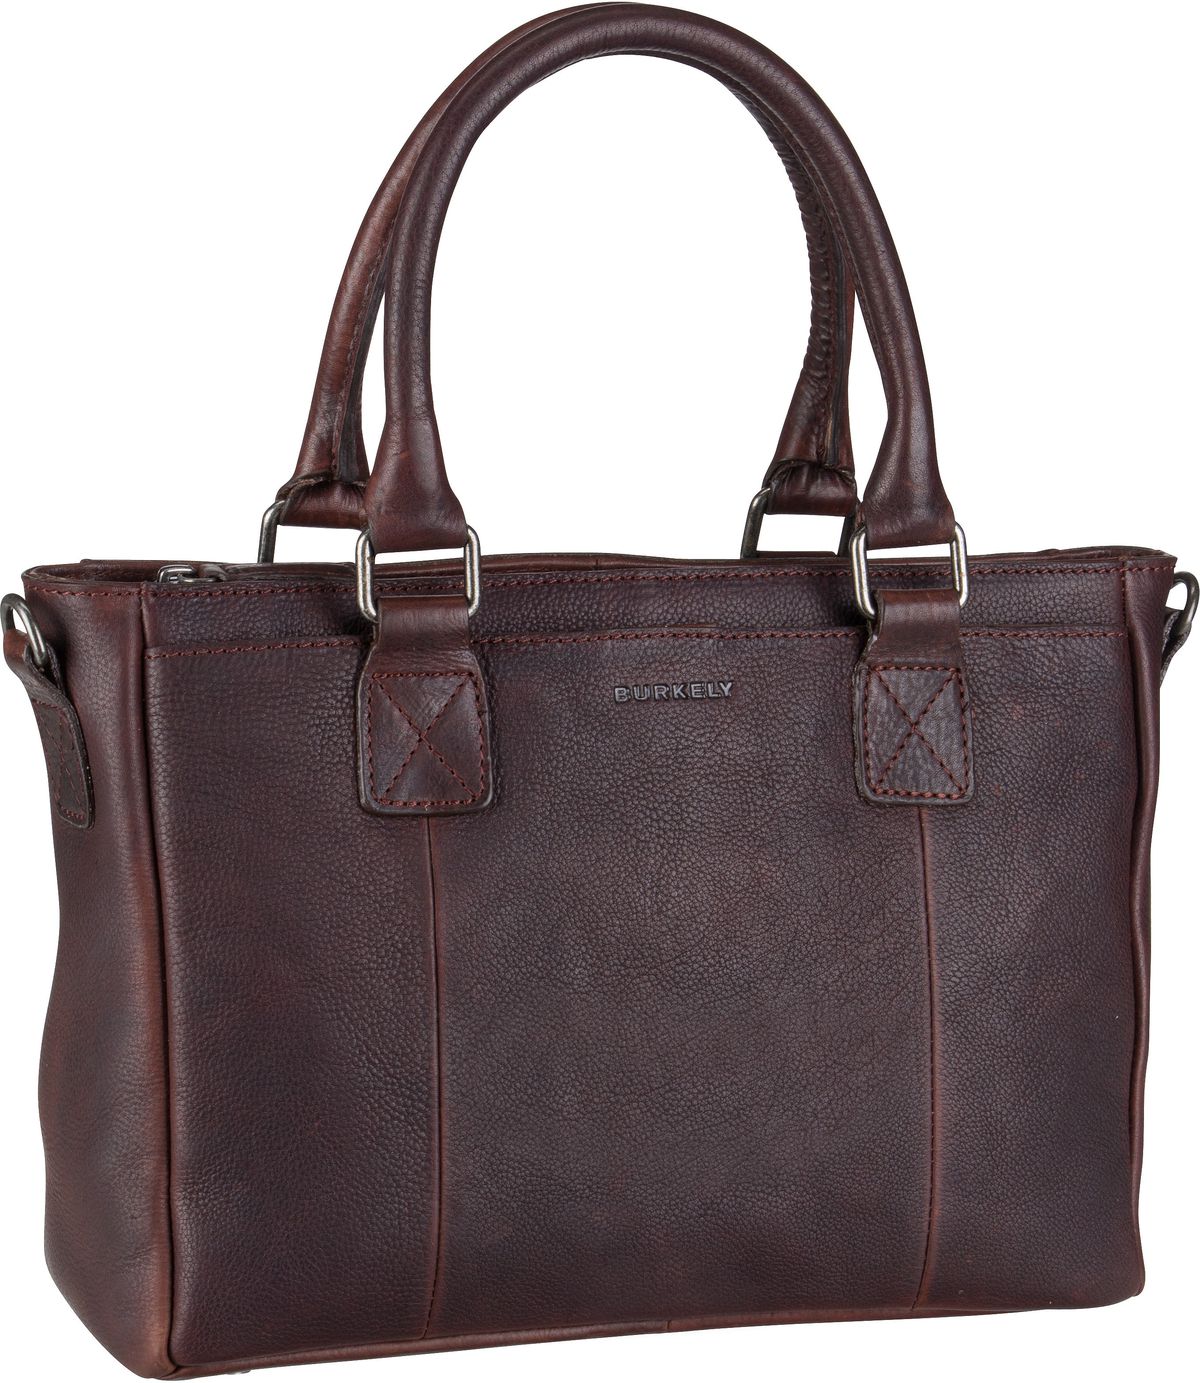 Burkely Antique Avery Handbag S 6956 - Brown